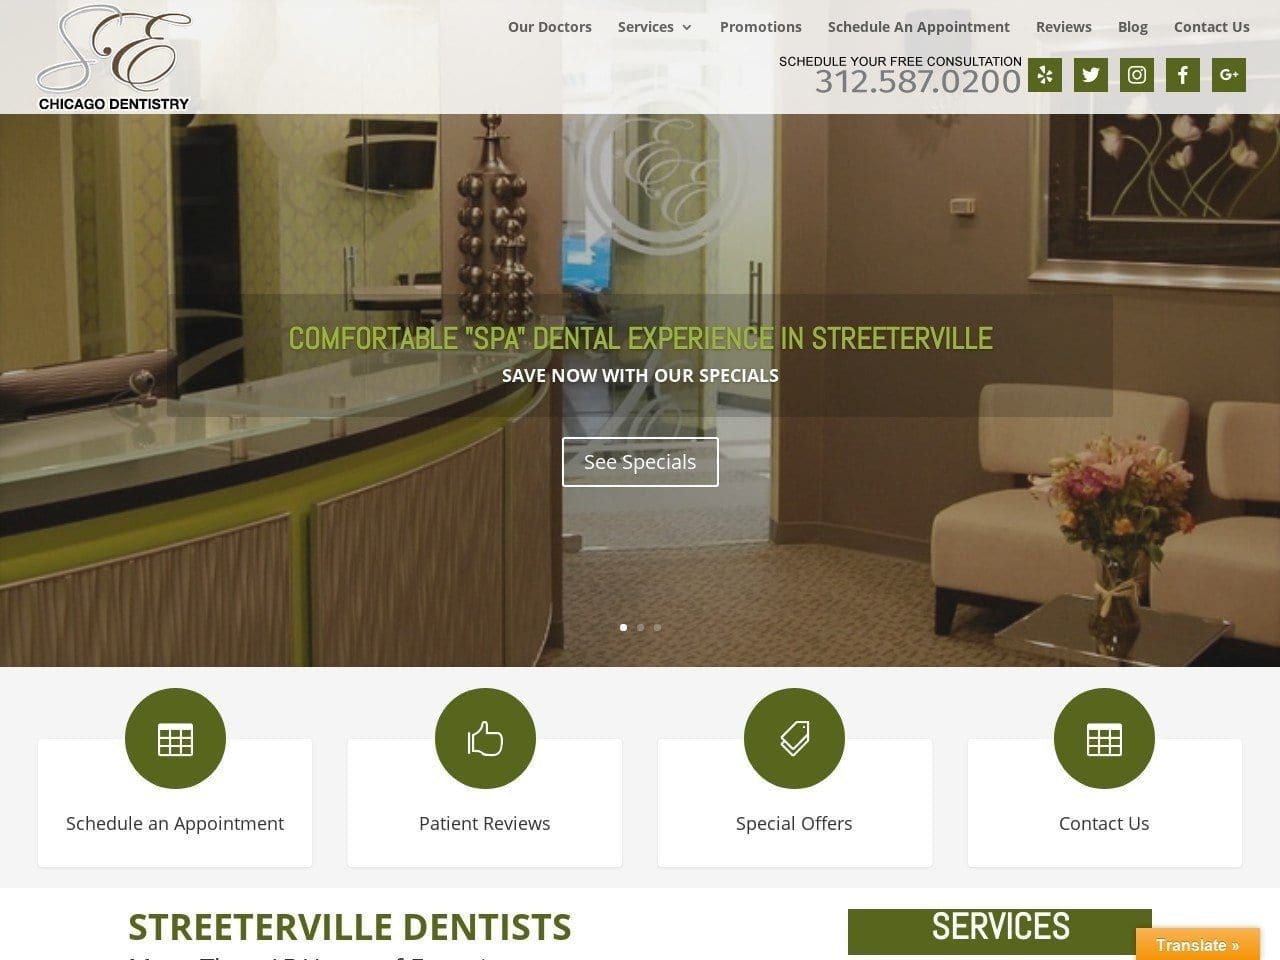 East Erie Dental Associates Website Screenshot from sechicagodentistry.com